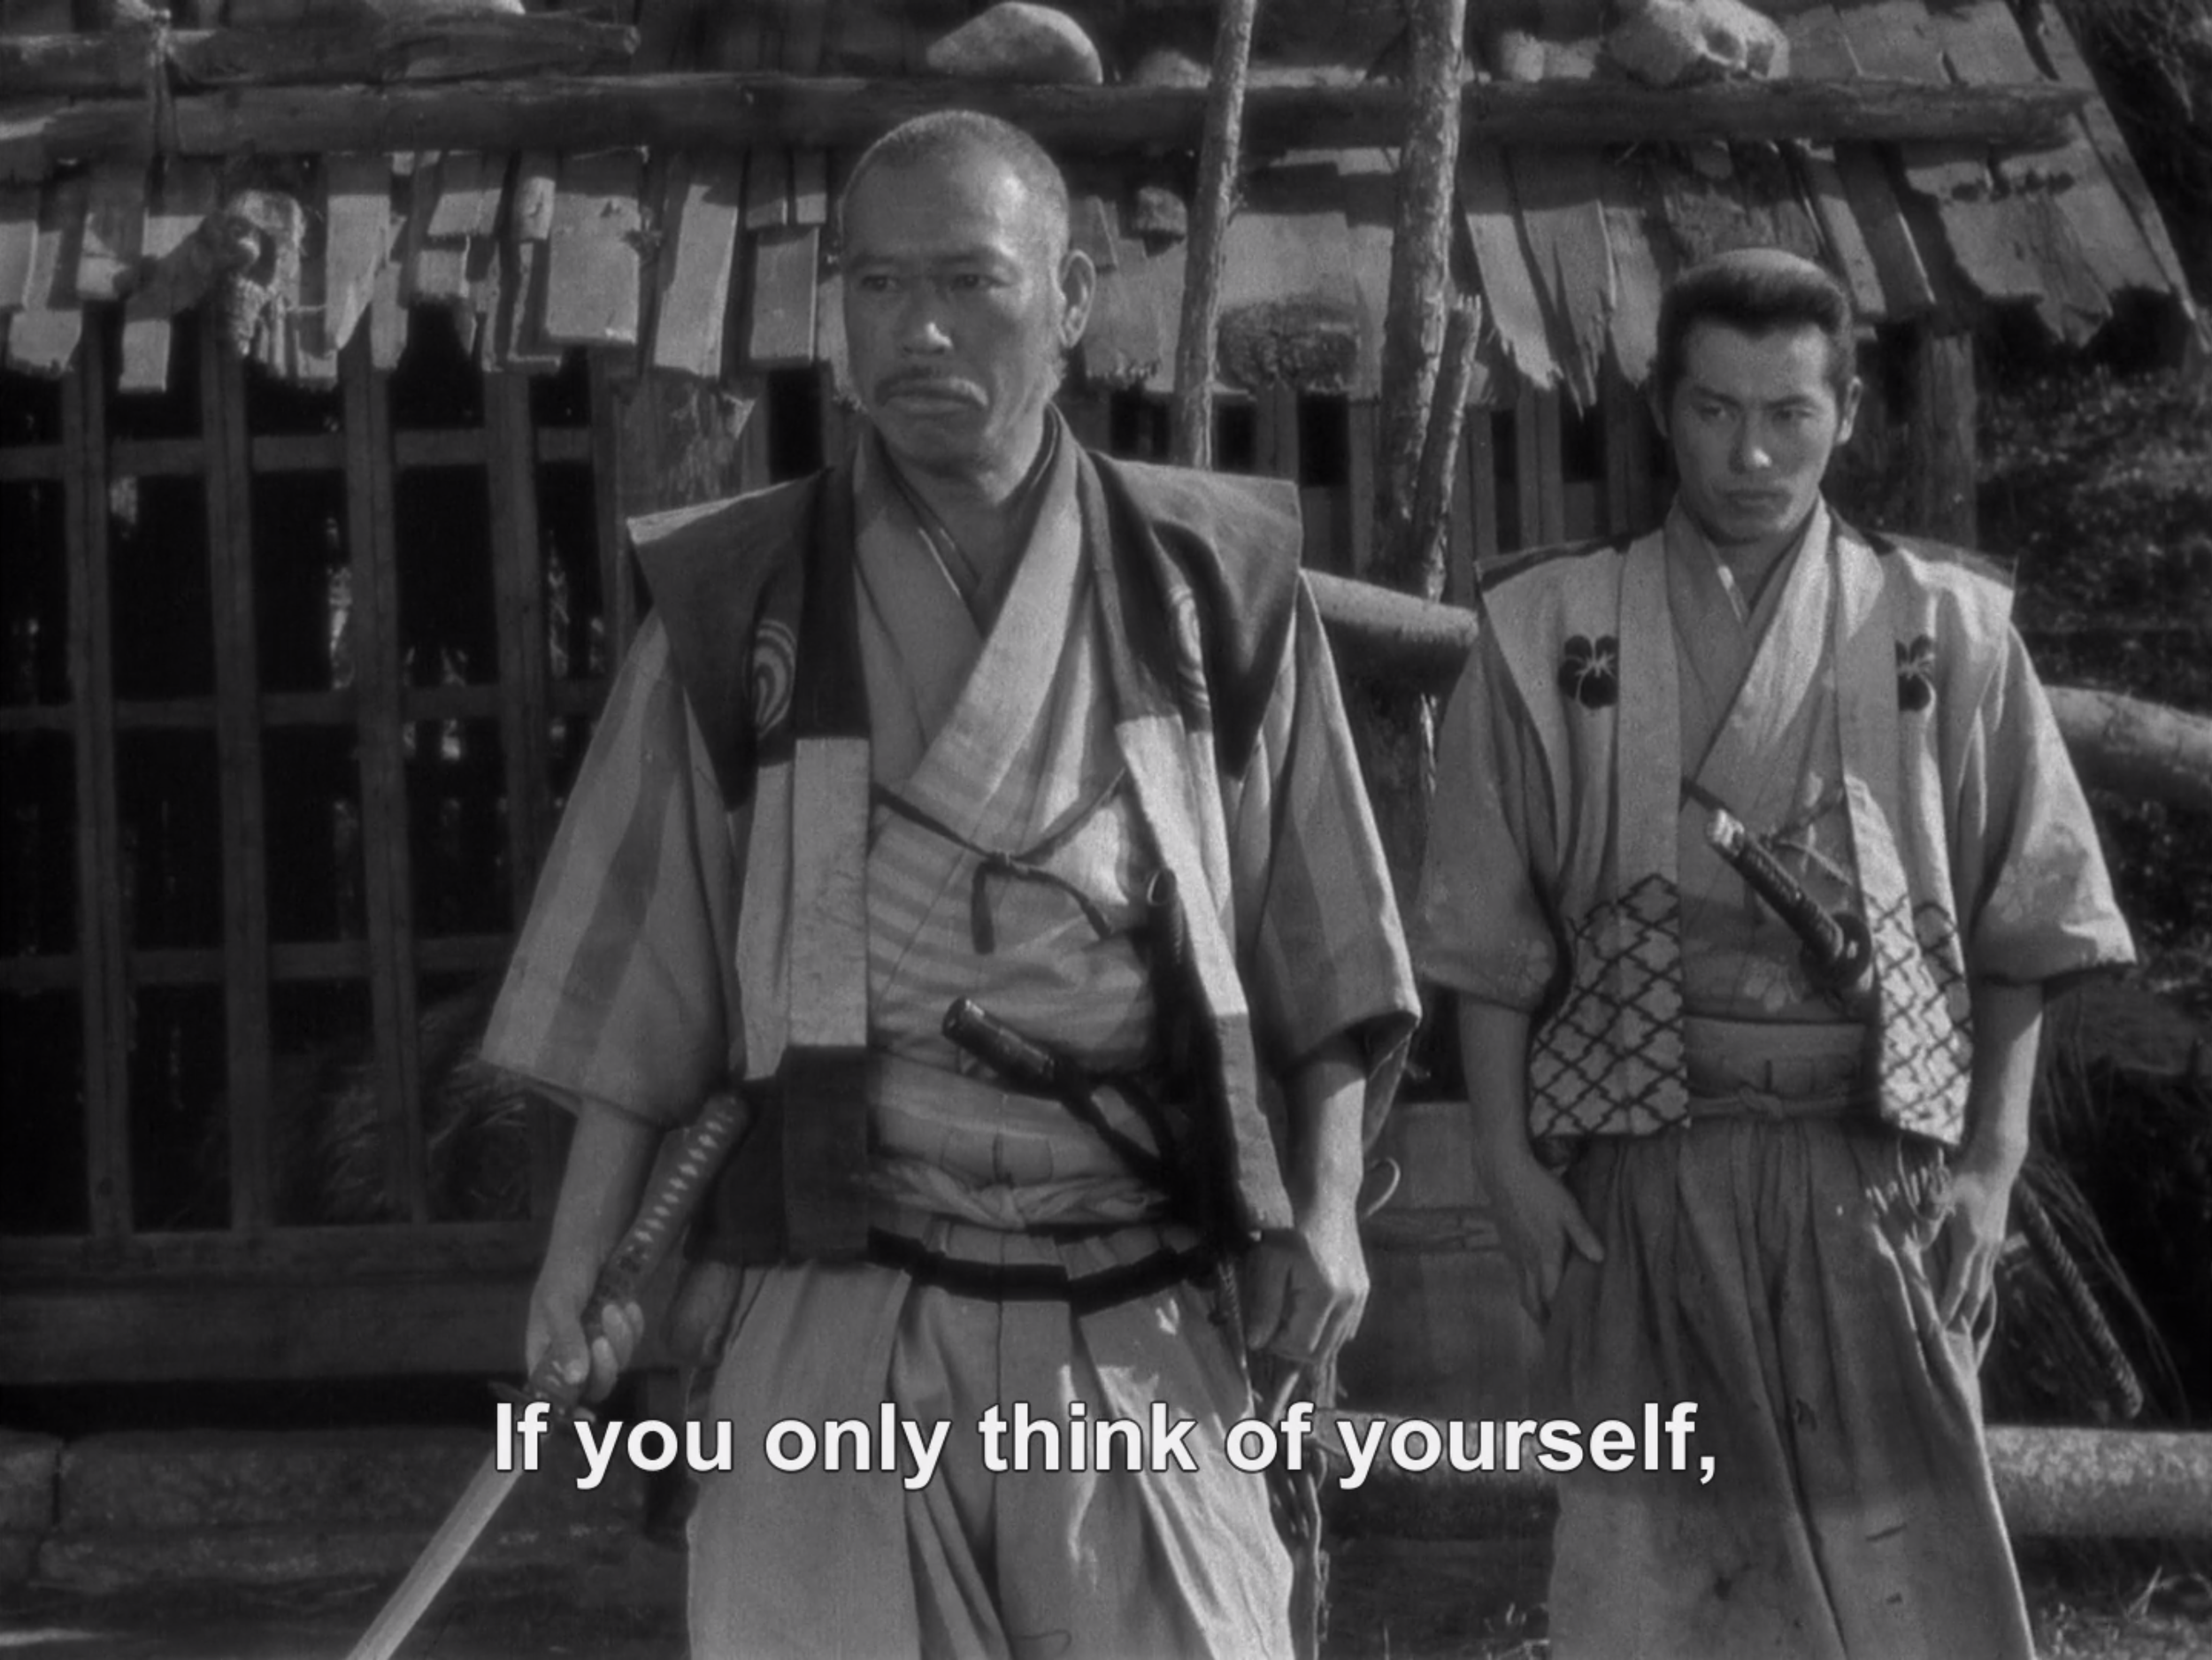 Akira Kurosawa Seven Samurai A-BitterSweet-Life By Protecting Others You Protect Yourself 2.png